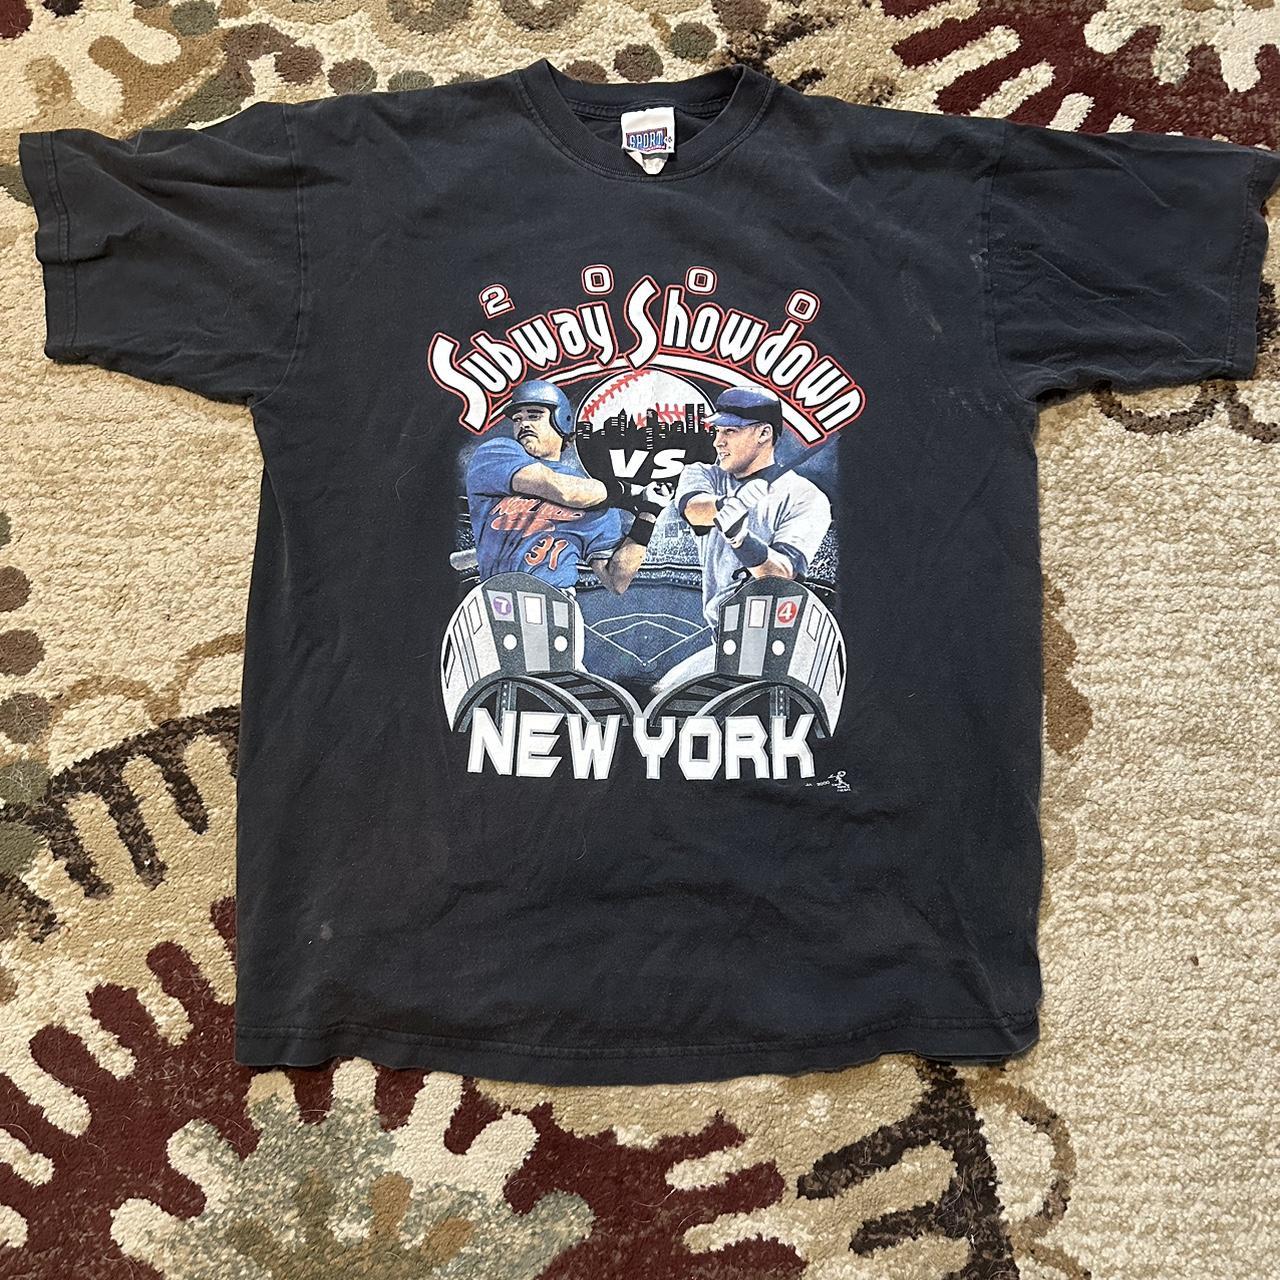 MLB Men's T-Shirt - Black - XL